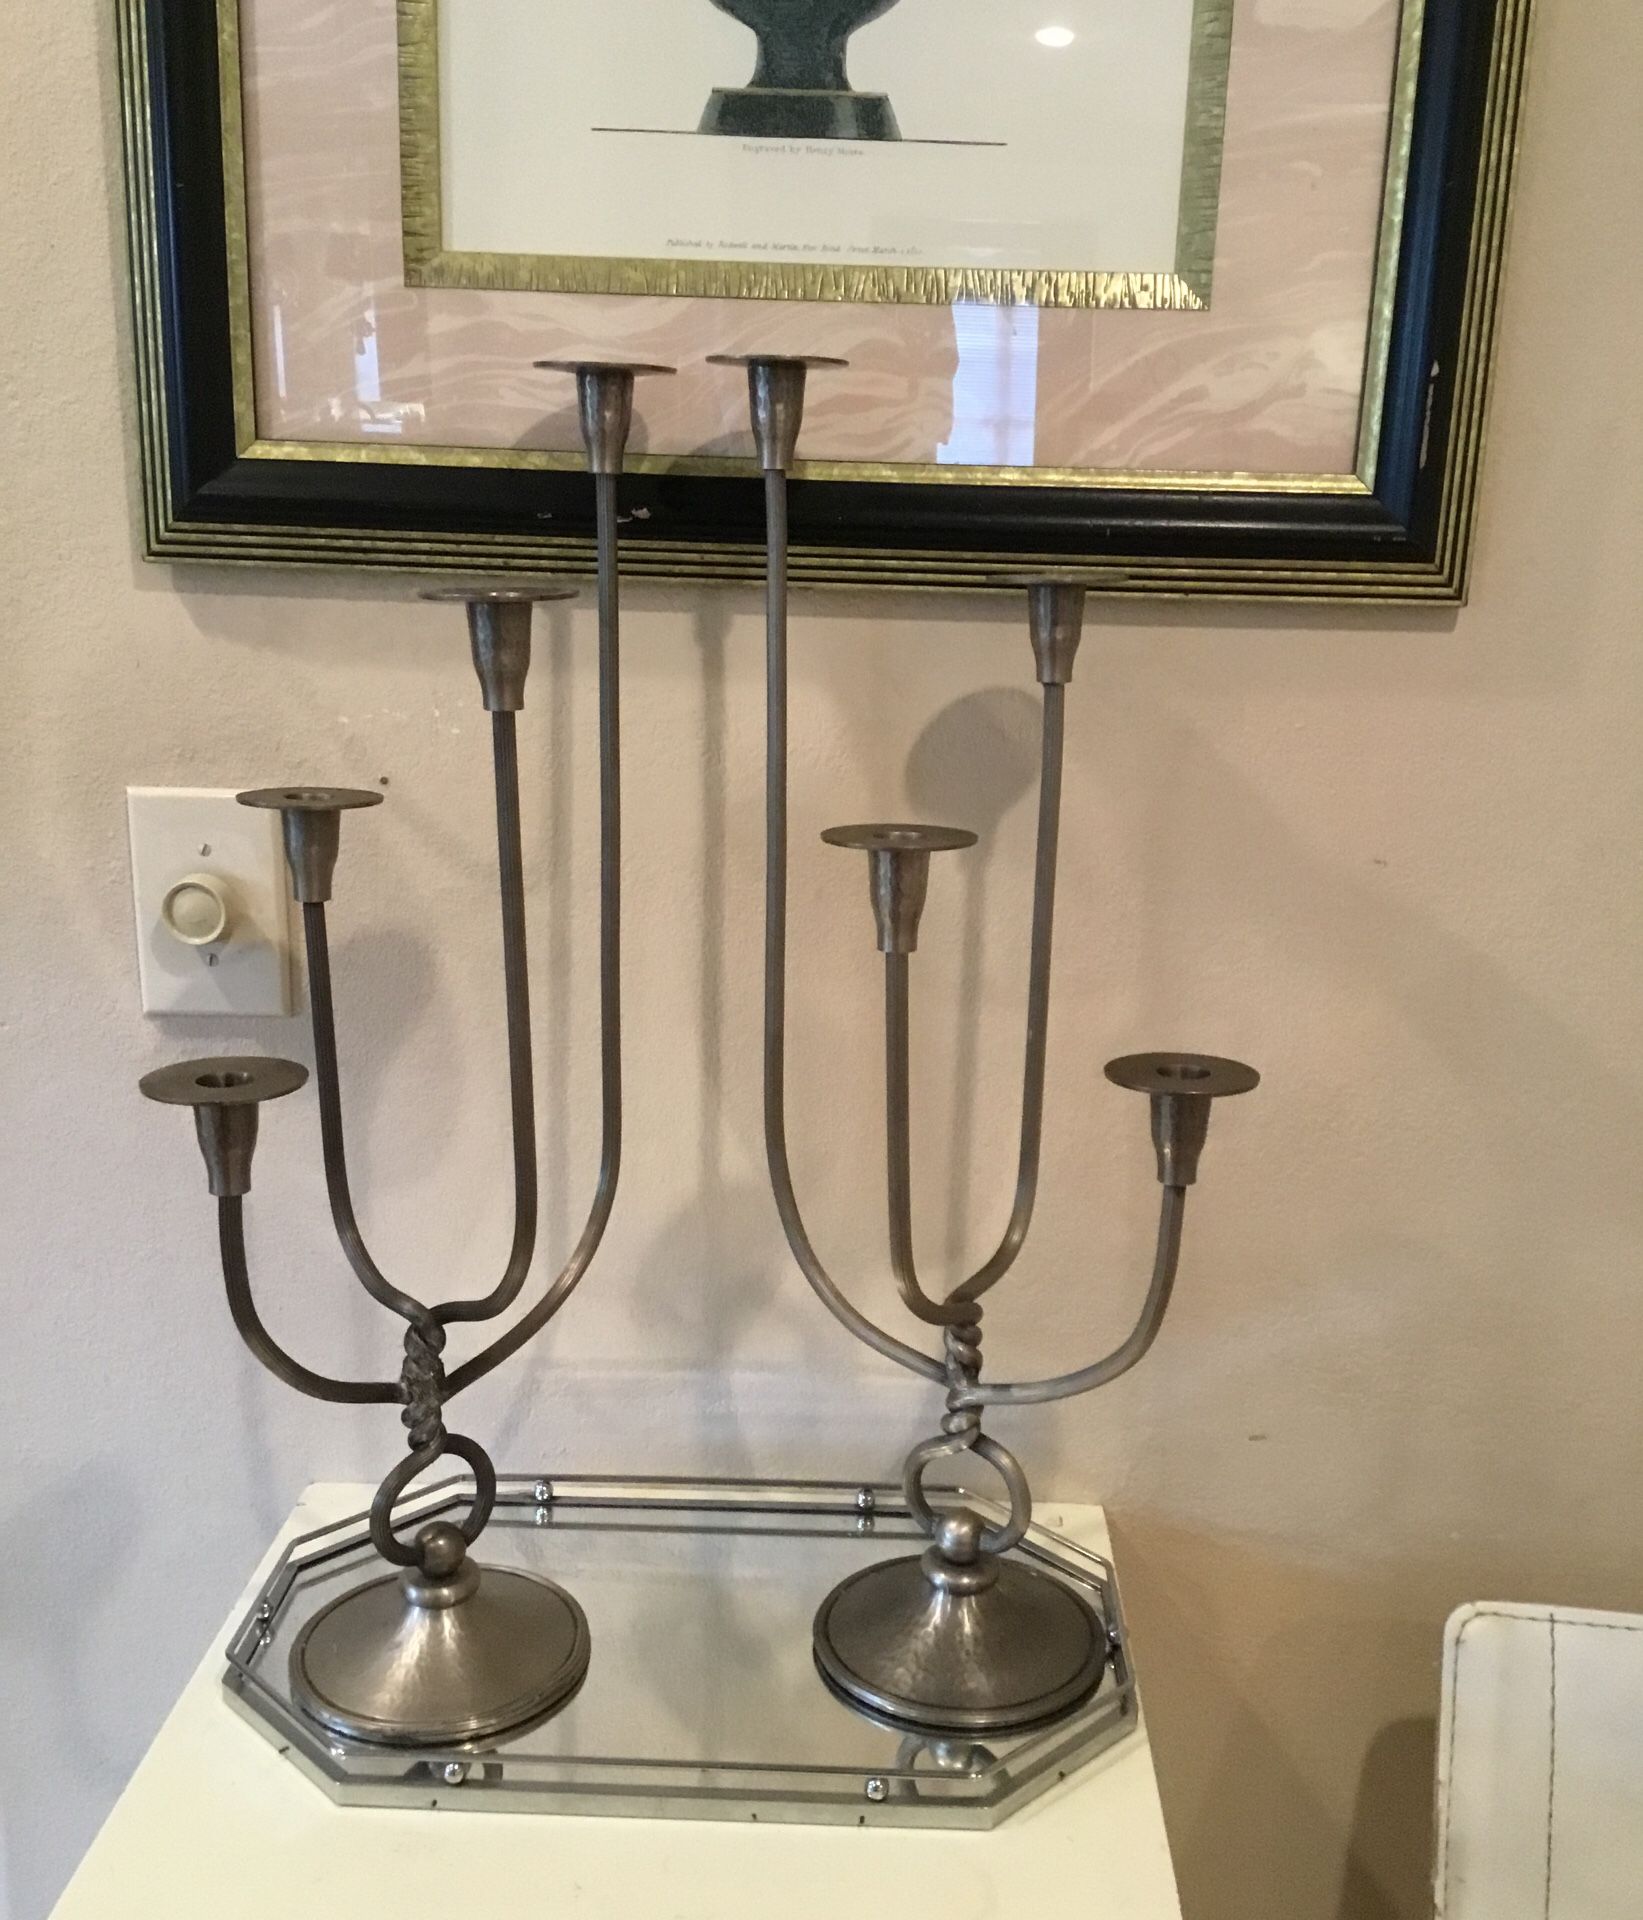 2 beautiful Iron candelabras